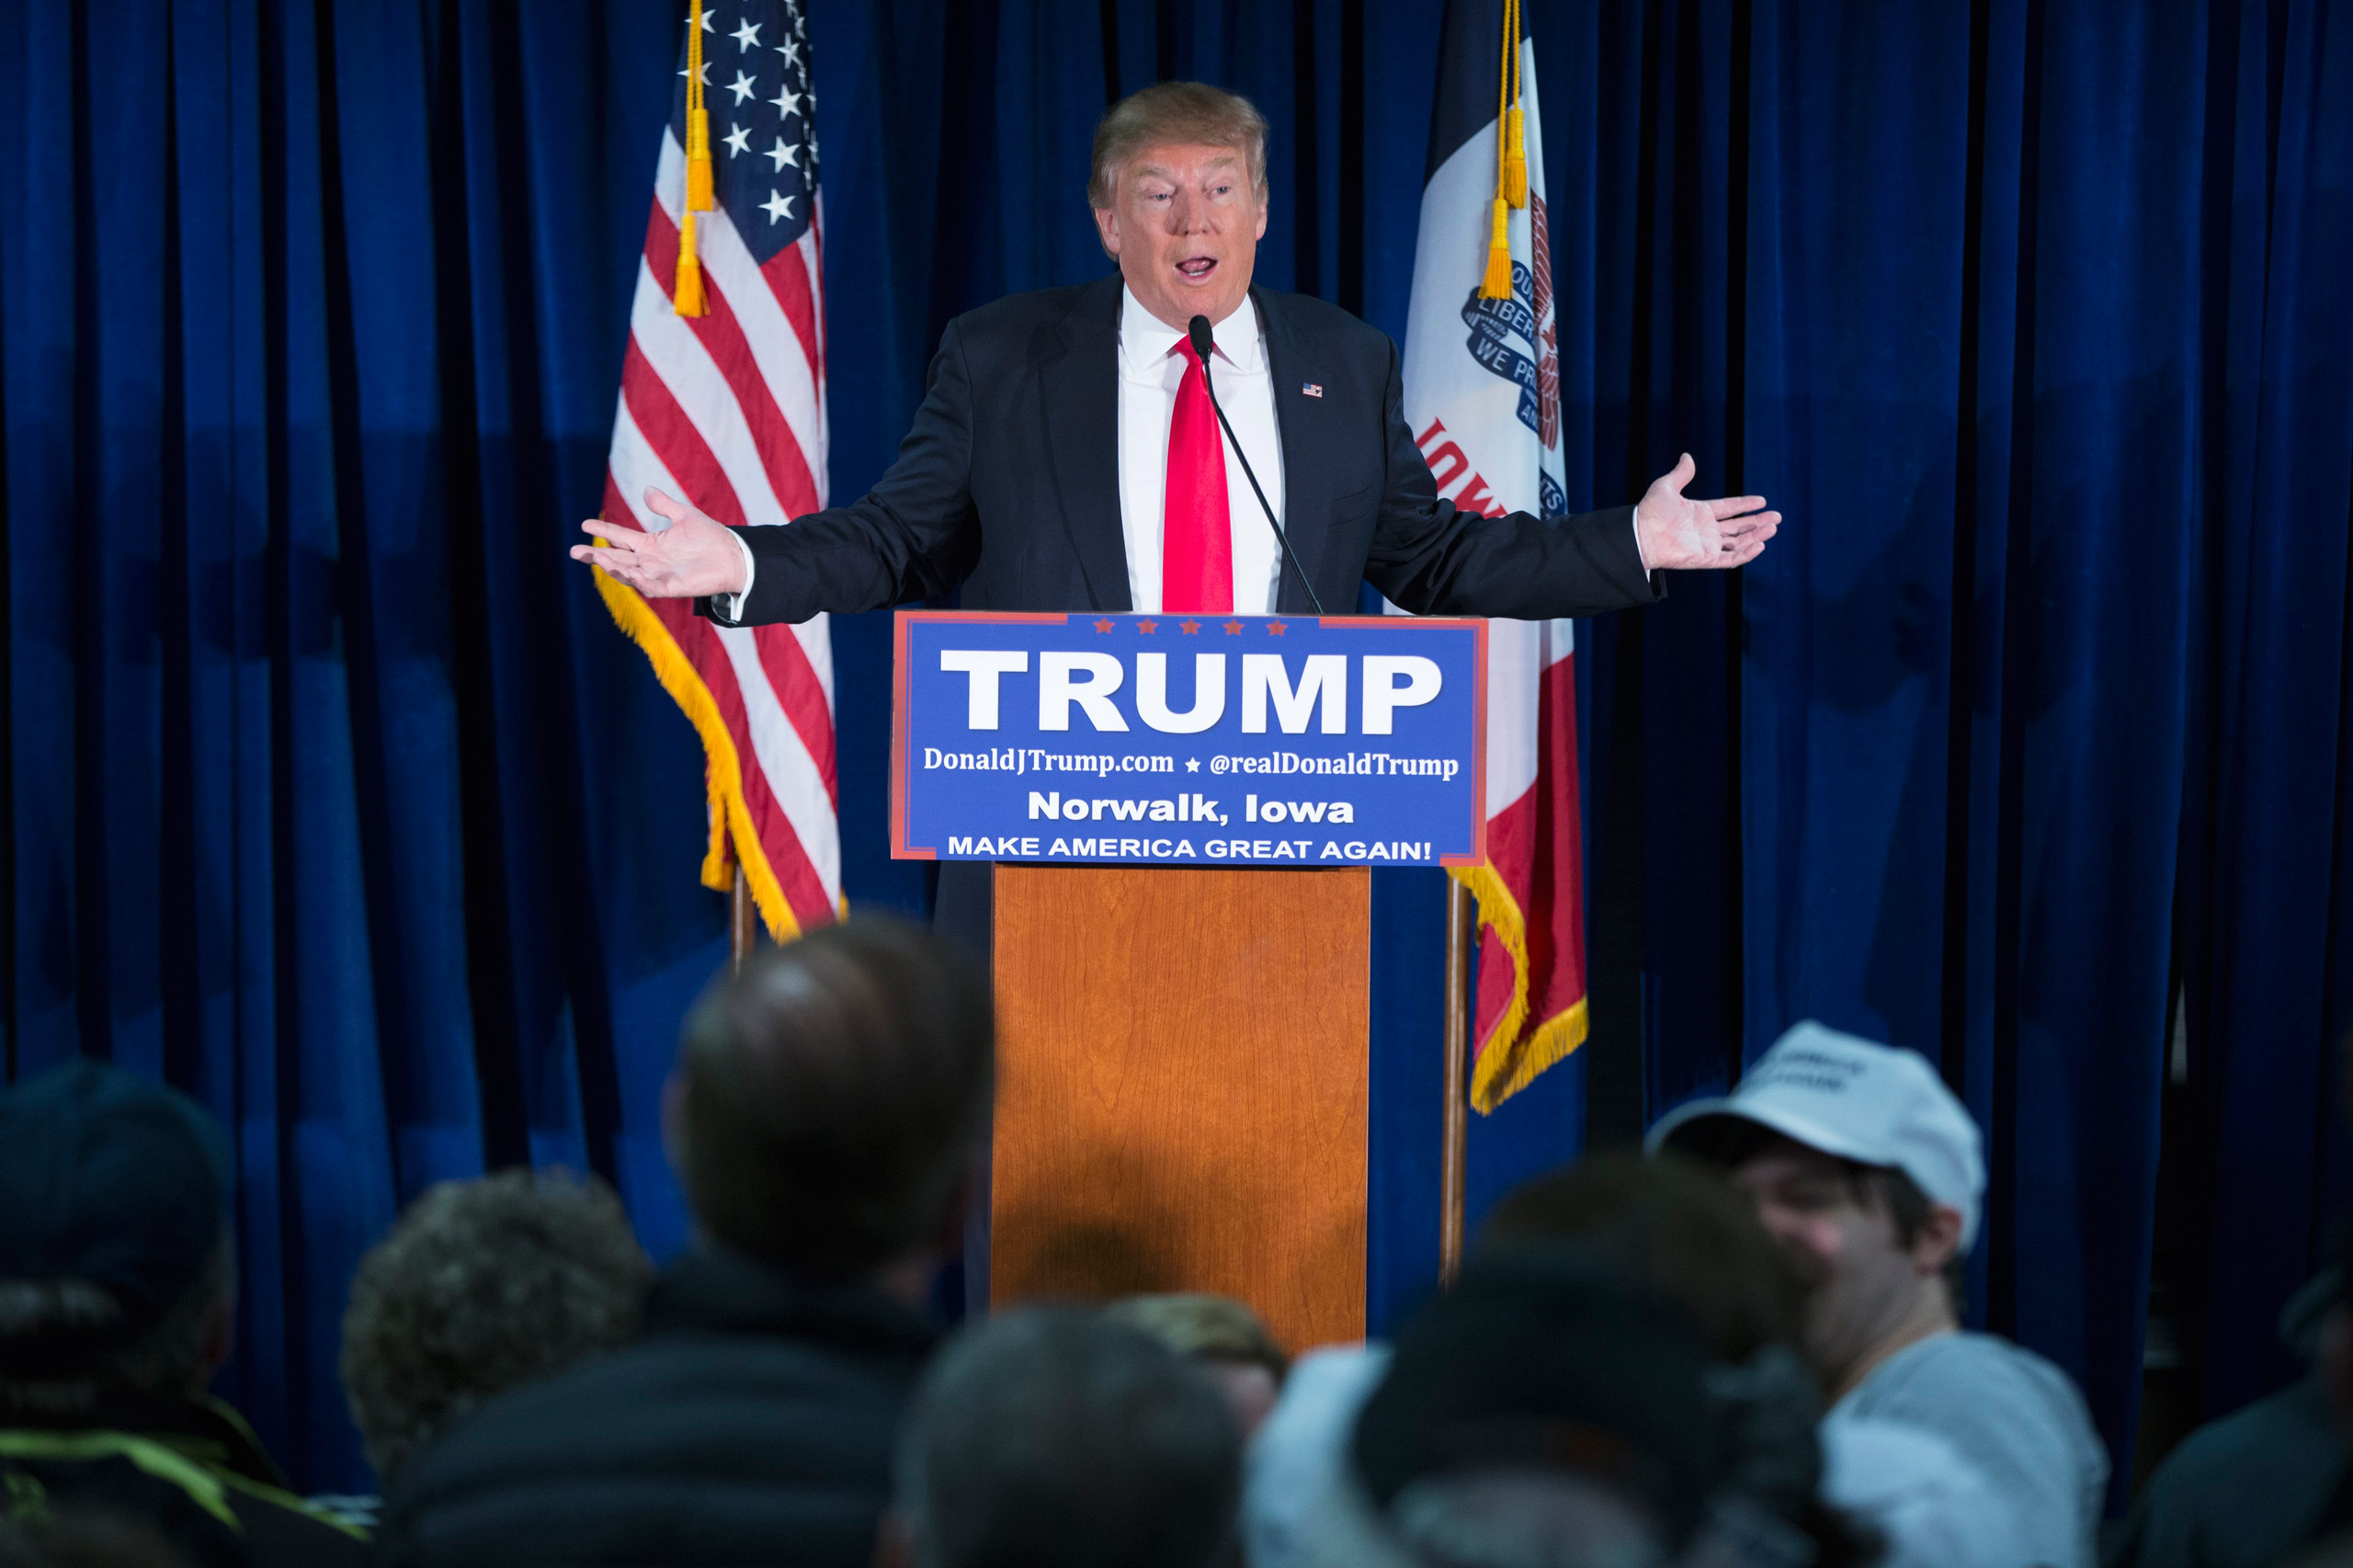 Republican presidential candidate Donald Trump speaks during a campaign event in Norwalk, Iowa, on Jan. 20, 2016. (Evan Vucci&mdash;AP)